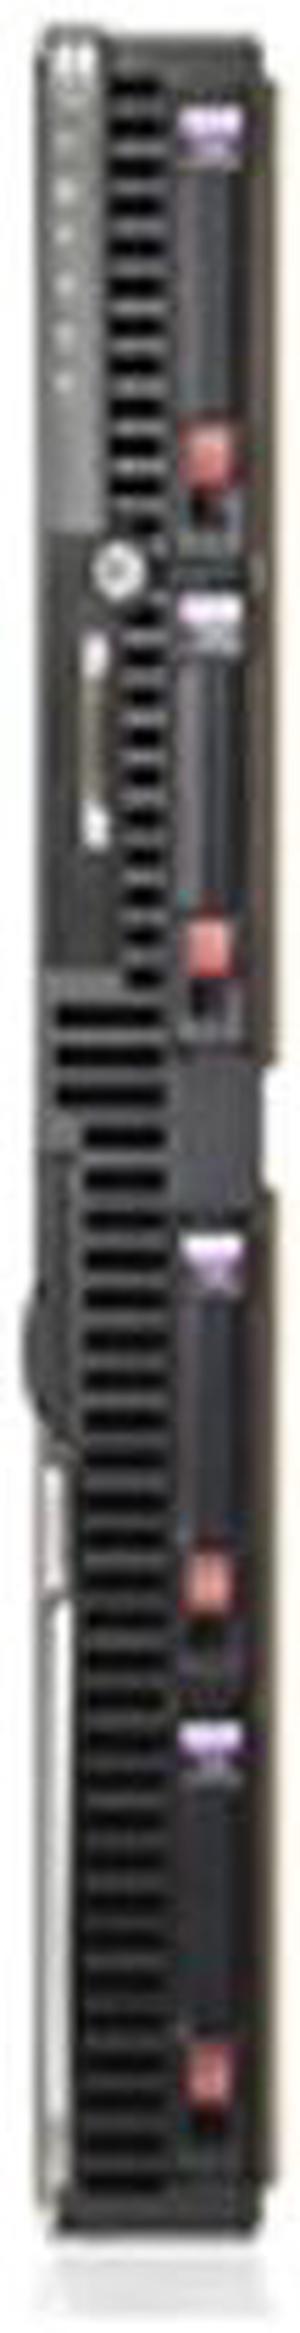 HP ProLiant BL480c Blade Xeon 5110 1.60 GHz 2 GB DDR2 Servers 1 x Dual-core Intel Xeon 5110 (1.60 GHz, 1066 MHz FSB) 2 GB (2 x 1 GB) PC2-5300 Fully Buffered DIMMs running at 667 MHz 416666-B21